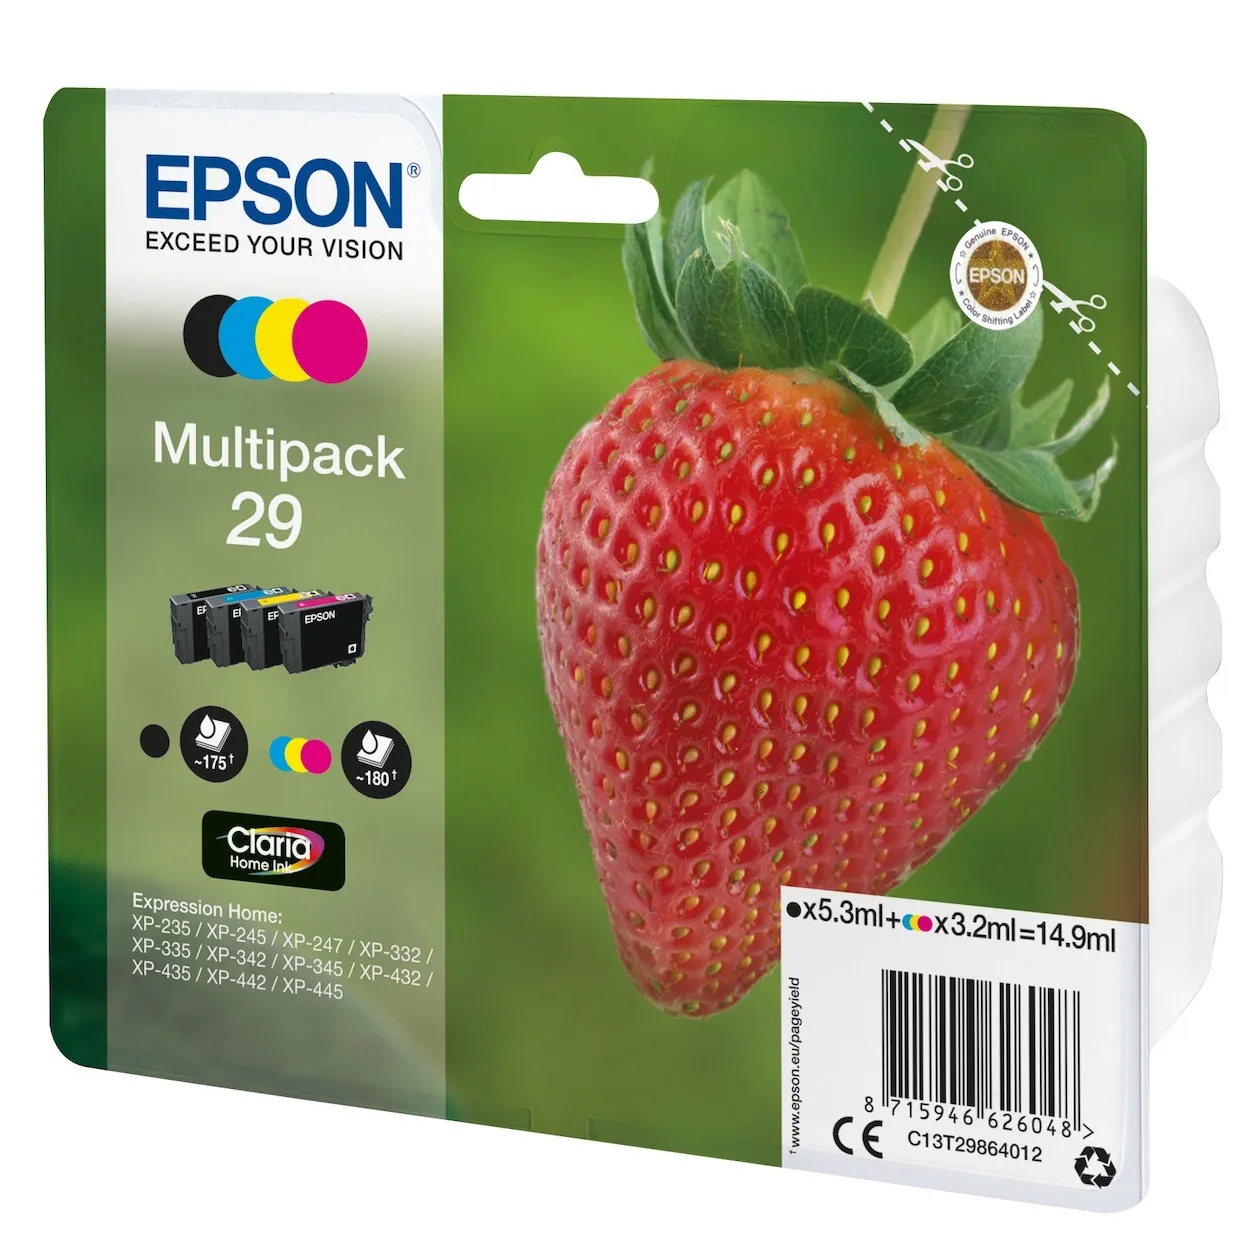 Epson 29 multipack - Aardbei Multi-color